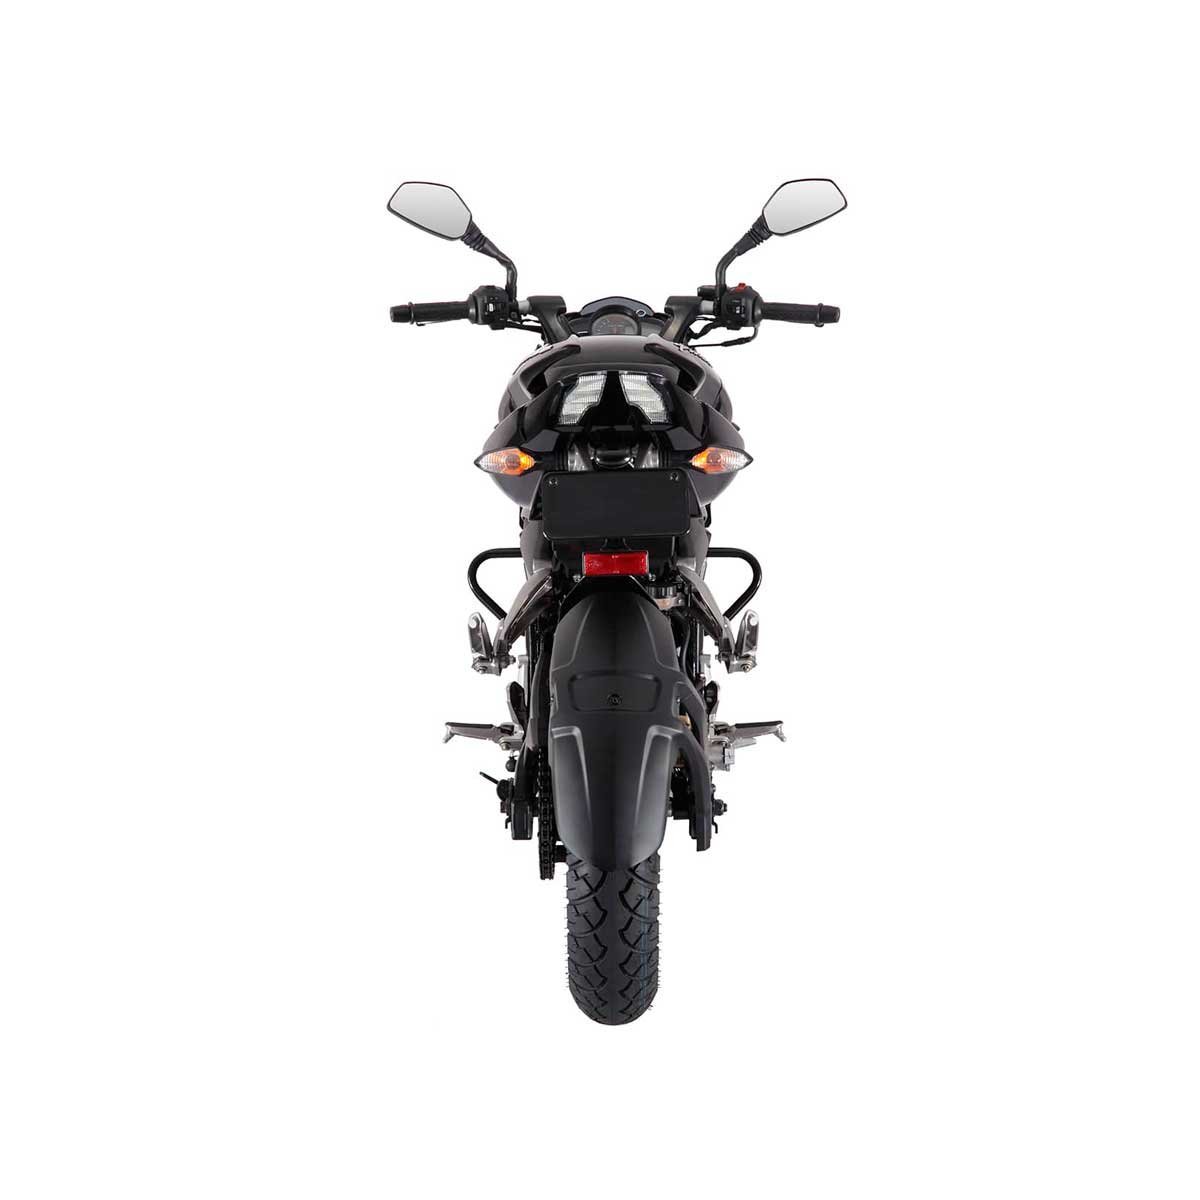 Motocicleta Pulsar Ns 200 Cc Negra Bajaj